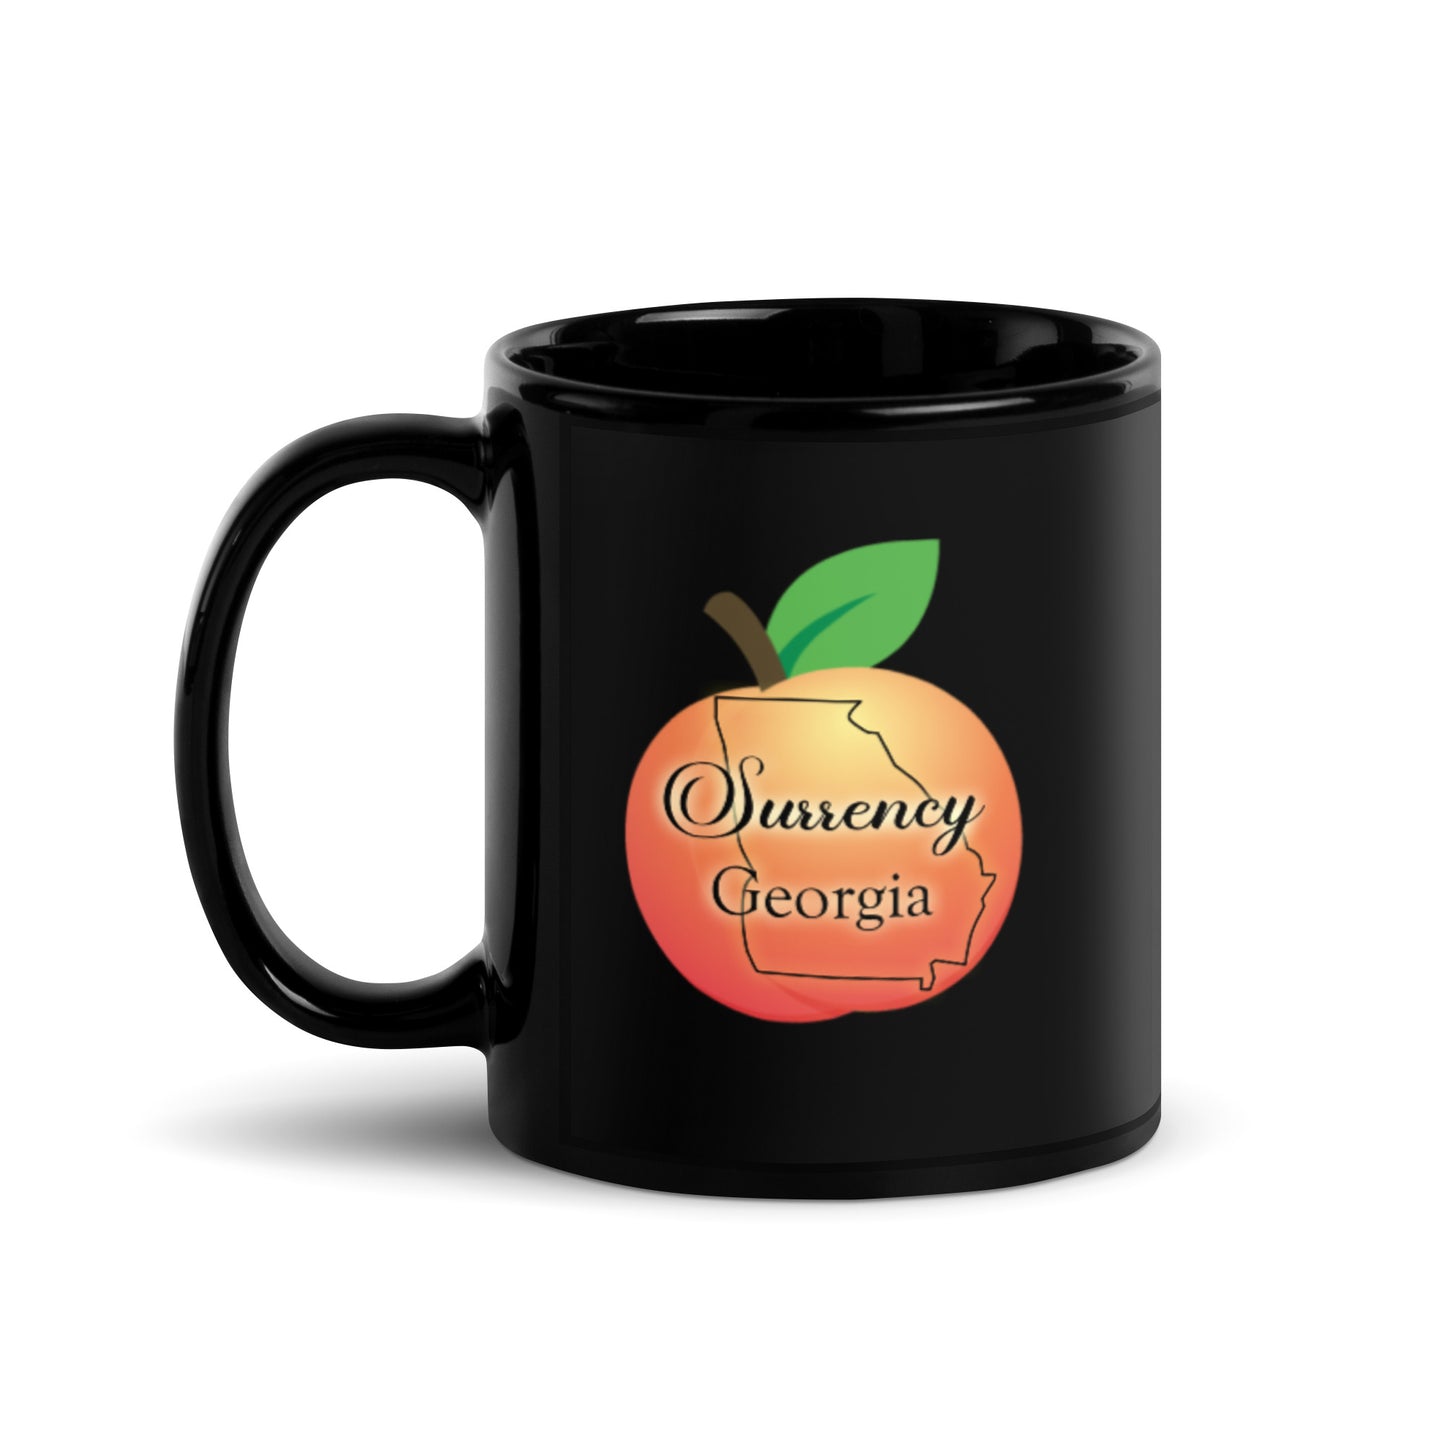 Surrency Georgia Black Ceramic Mug